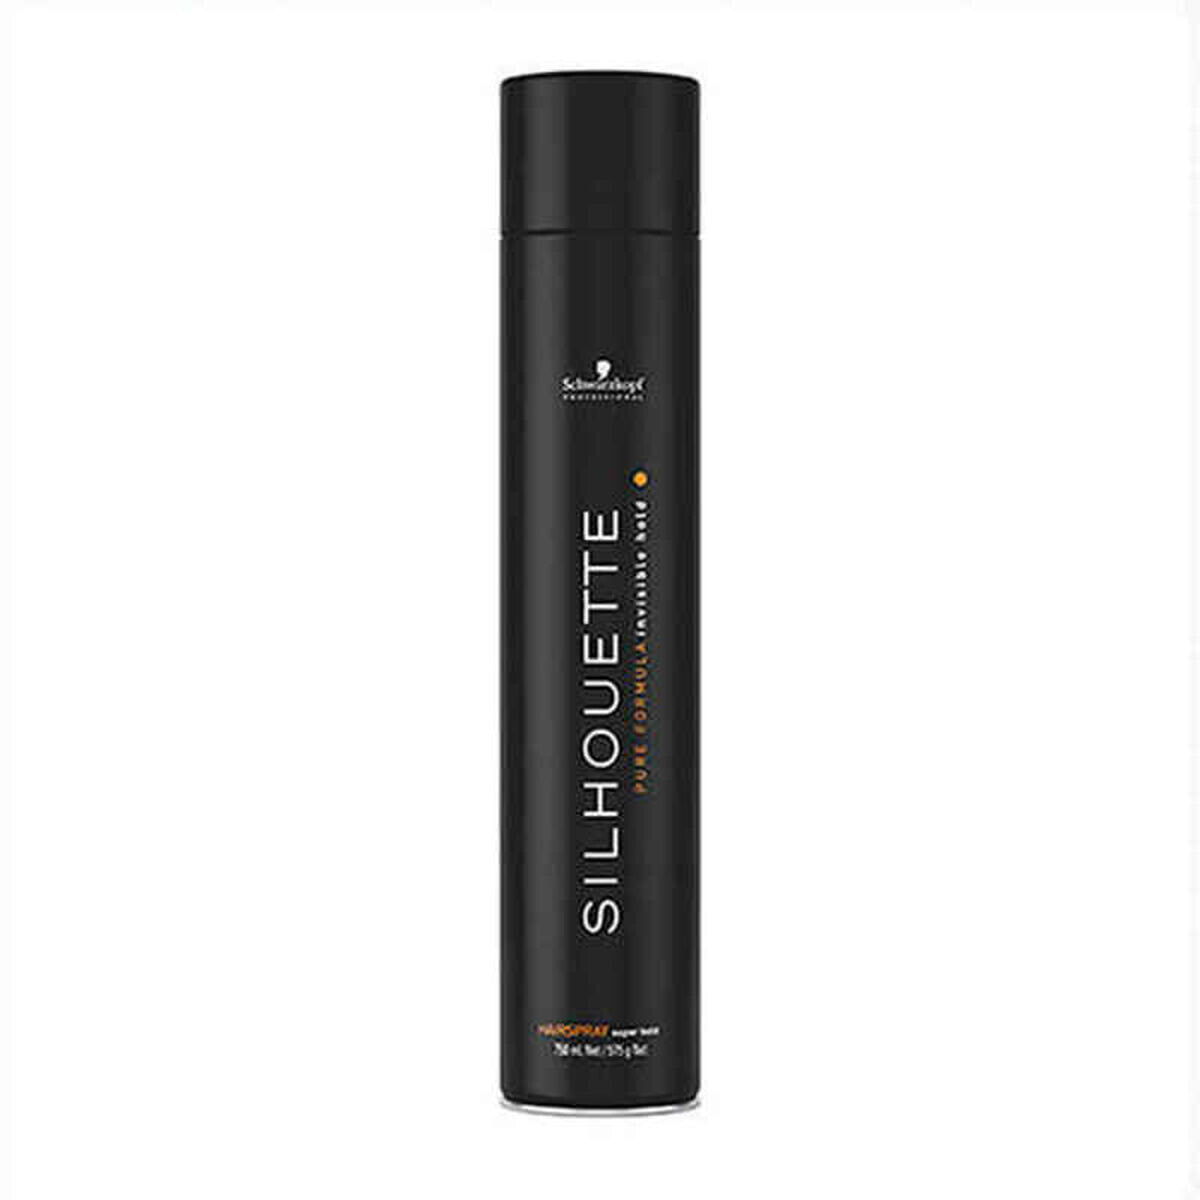 Strong Hold Hair Spray Silhouette Schwarzkopf 9191 (750 ml)